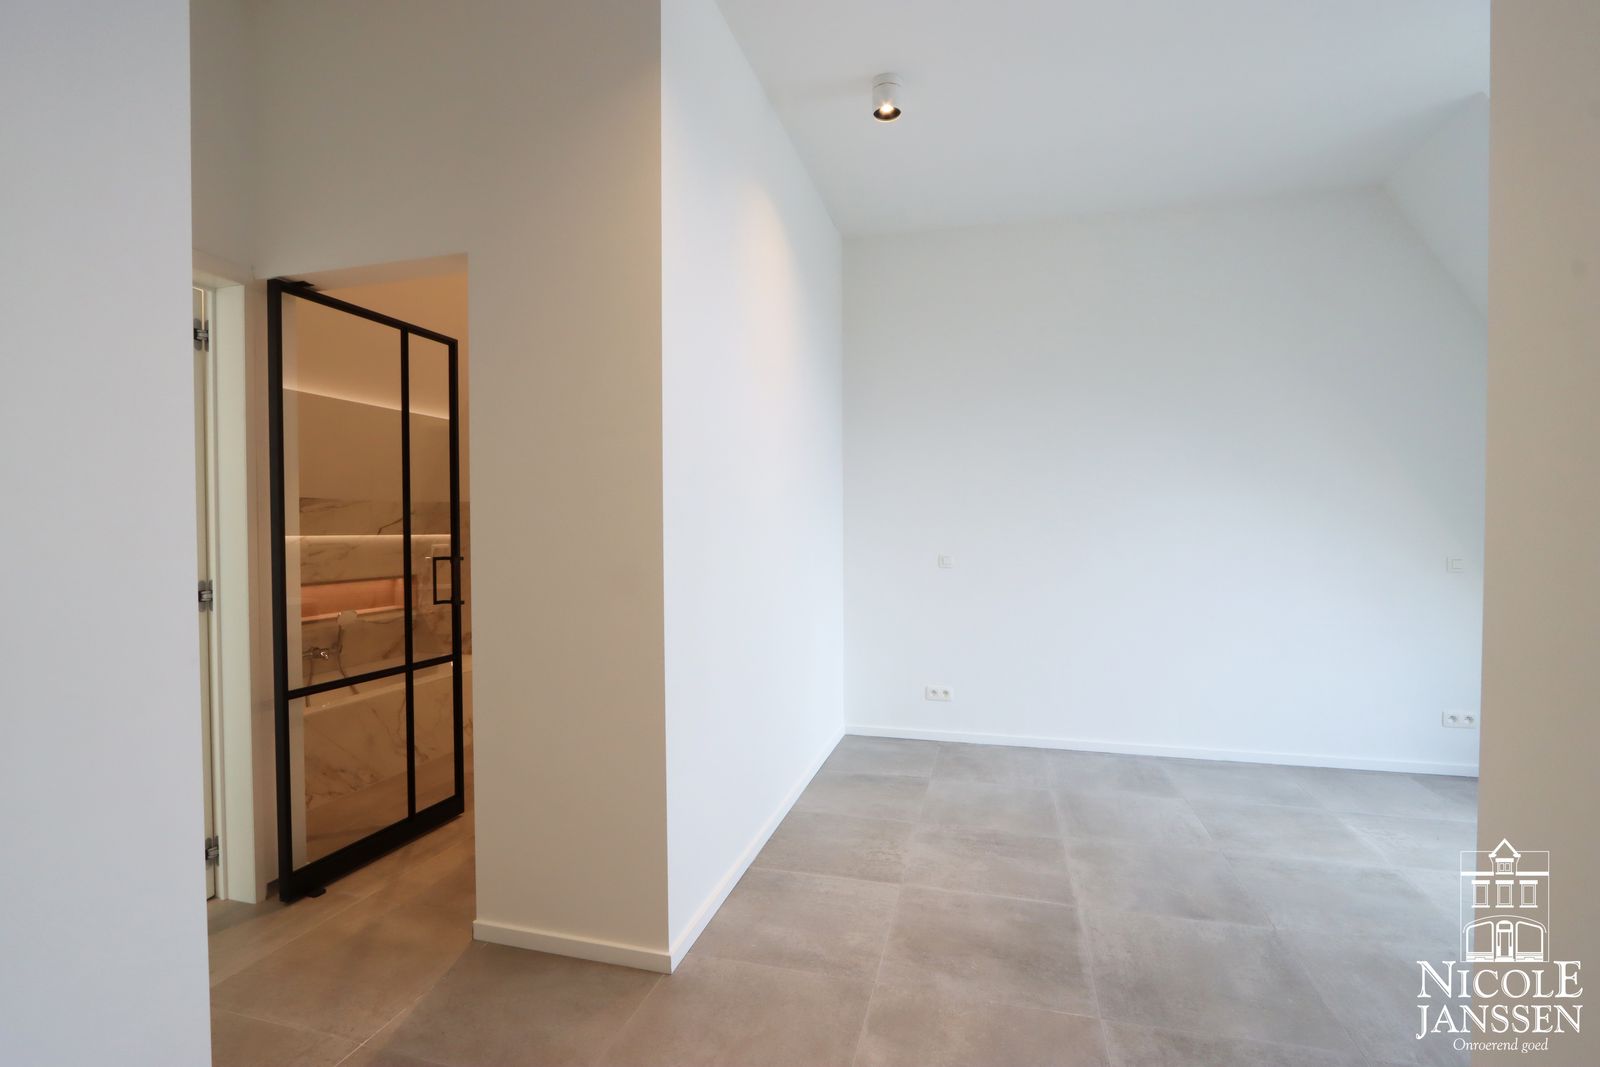 14 Nicole Janssen - appartement te huur - Boomgaardstraat 24b41 te Maaseik - slaapkamer groot.jpg